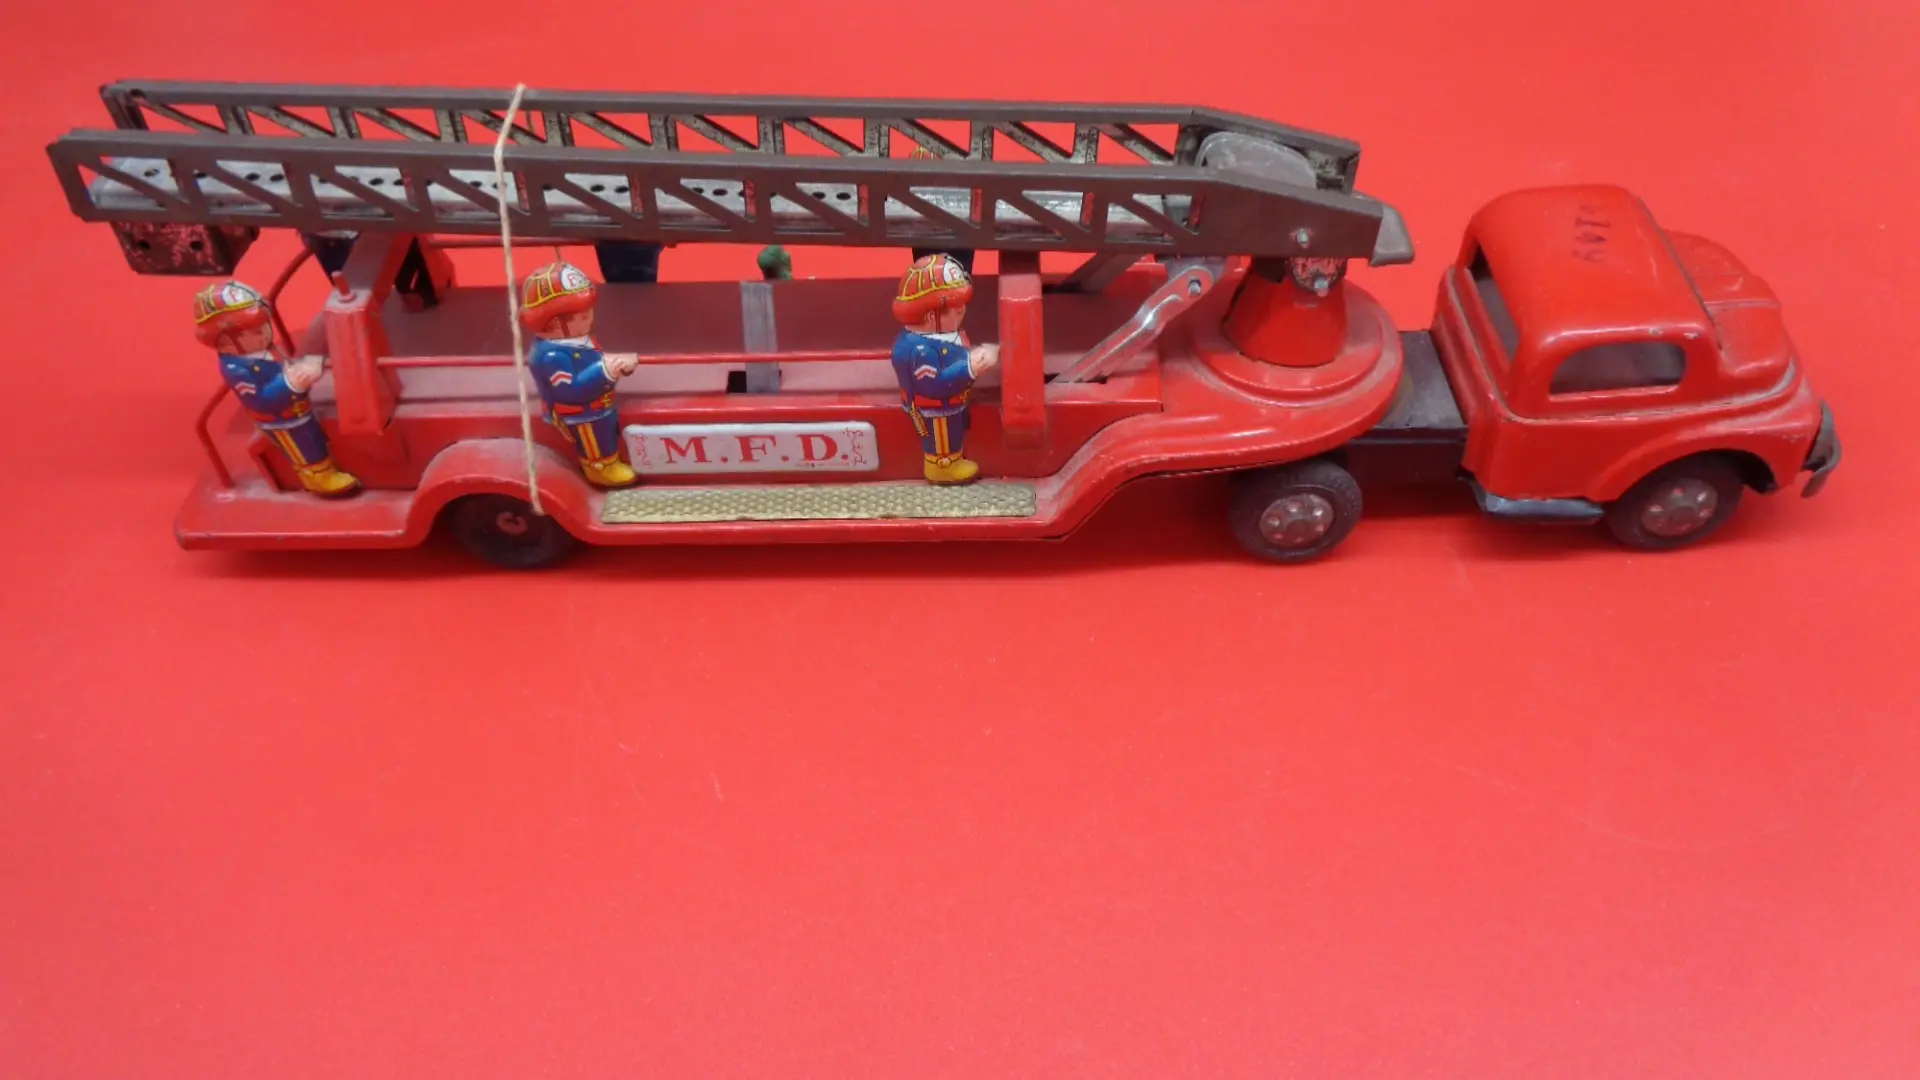 Long, vintage toy firetruck